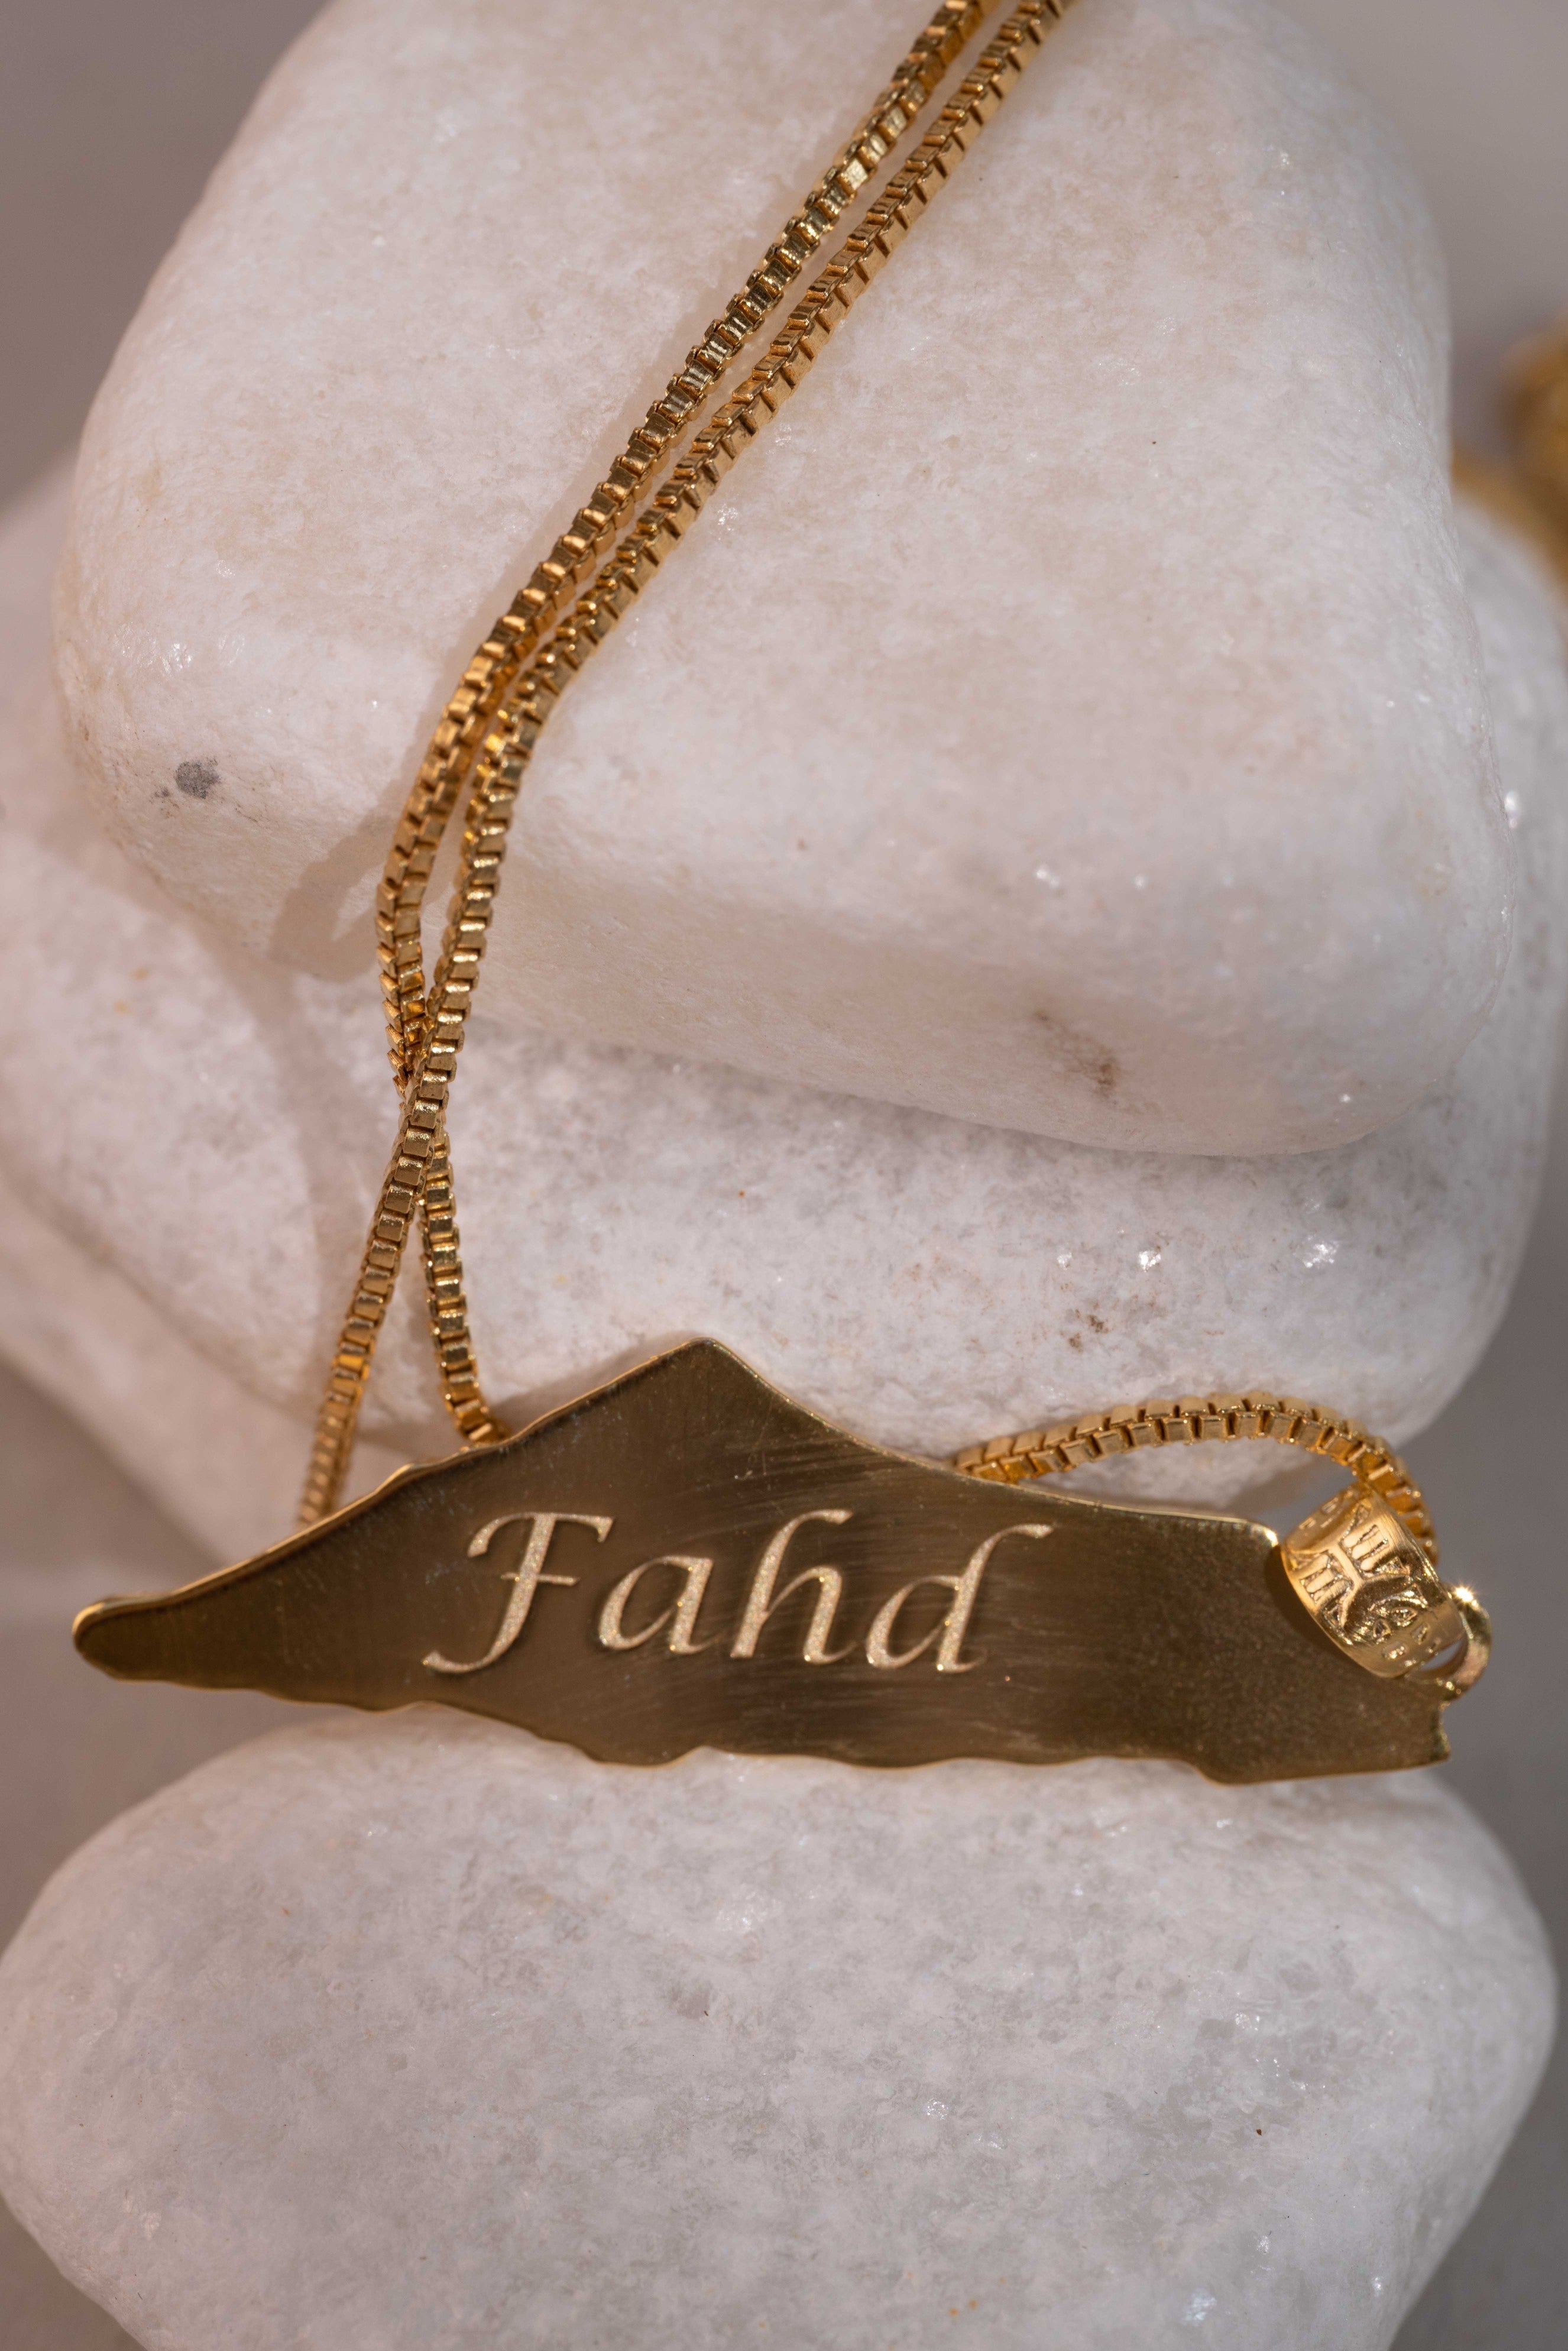 Palestine Necklace (customize your name) - Yshmk